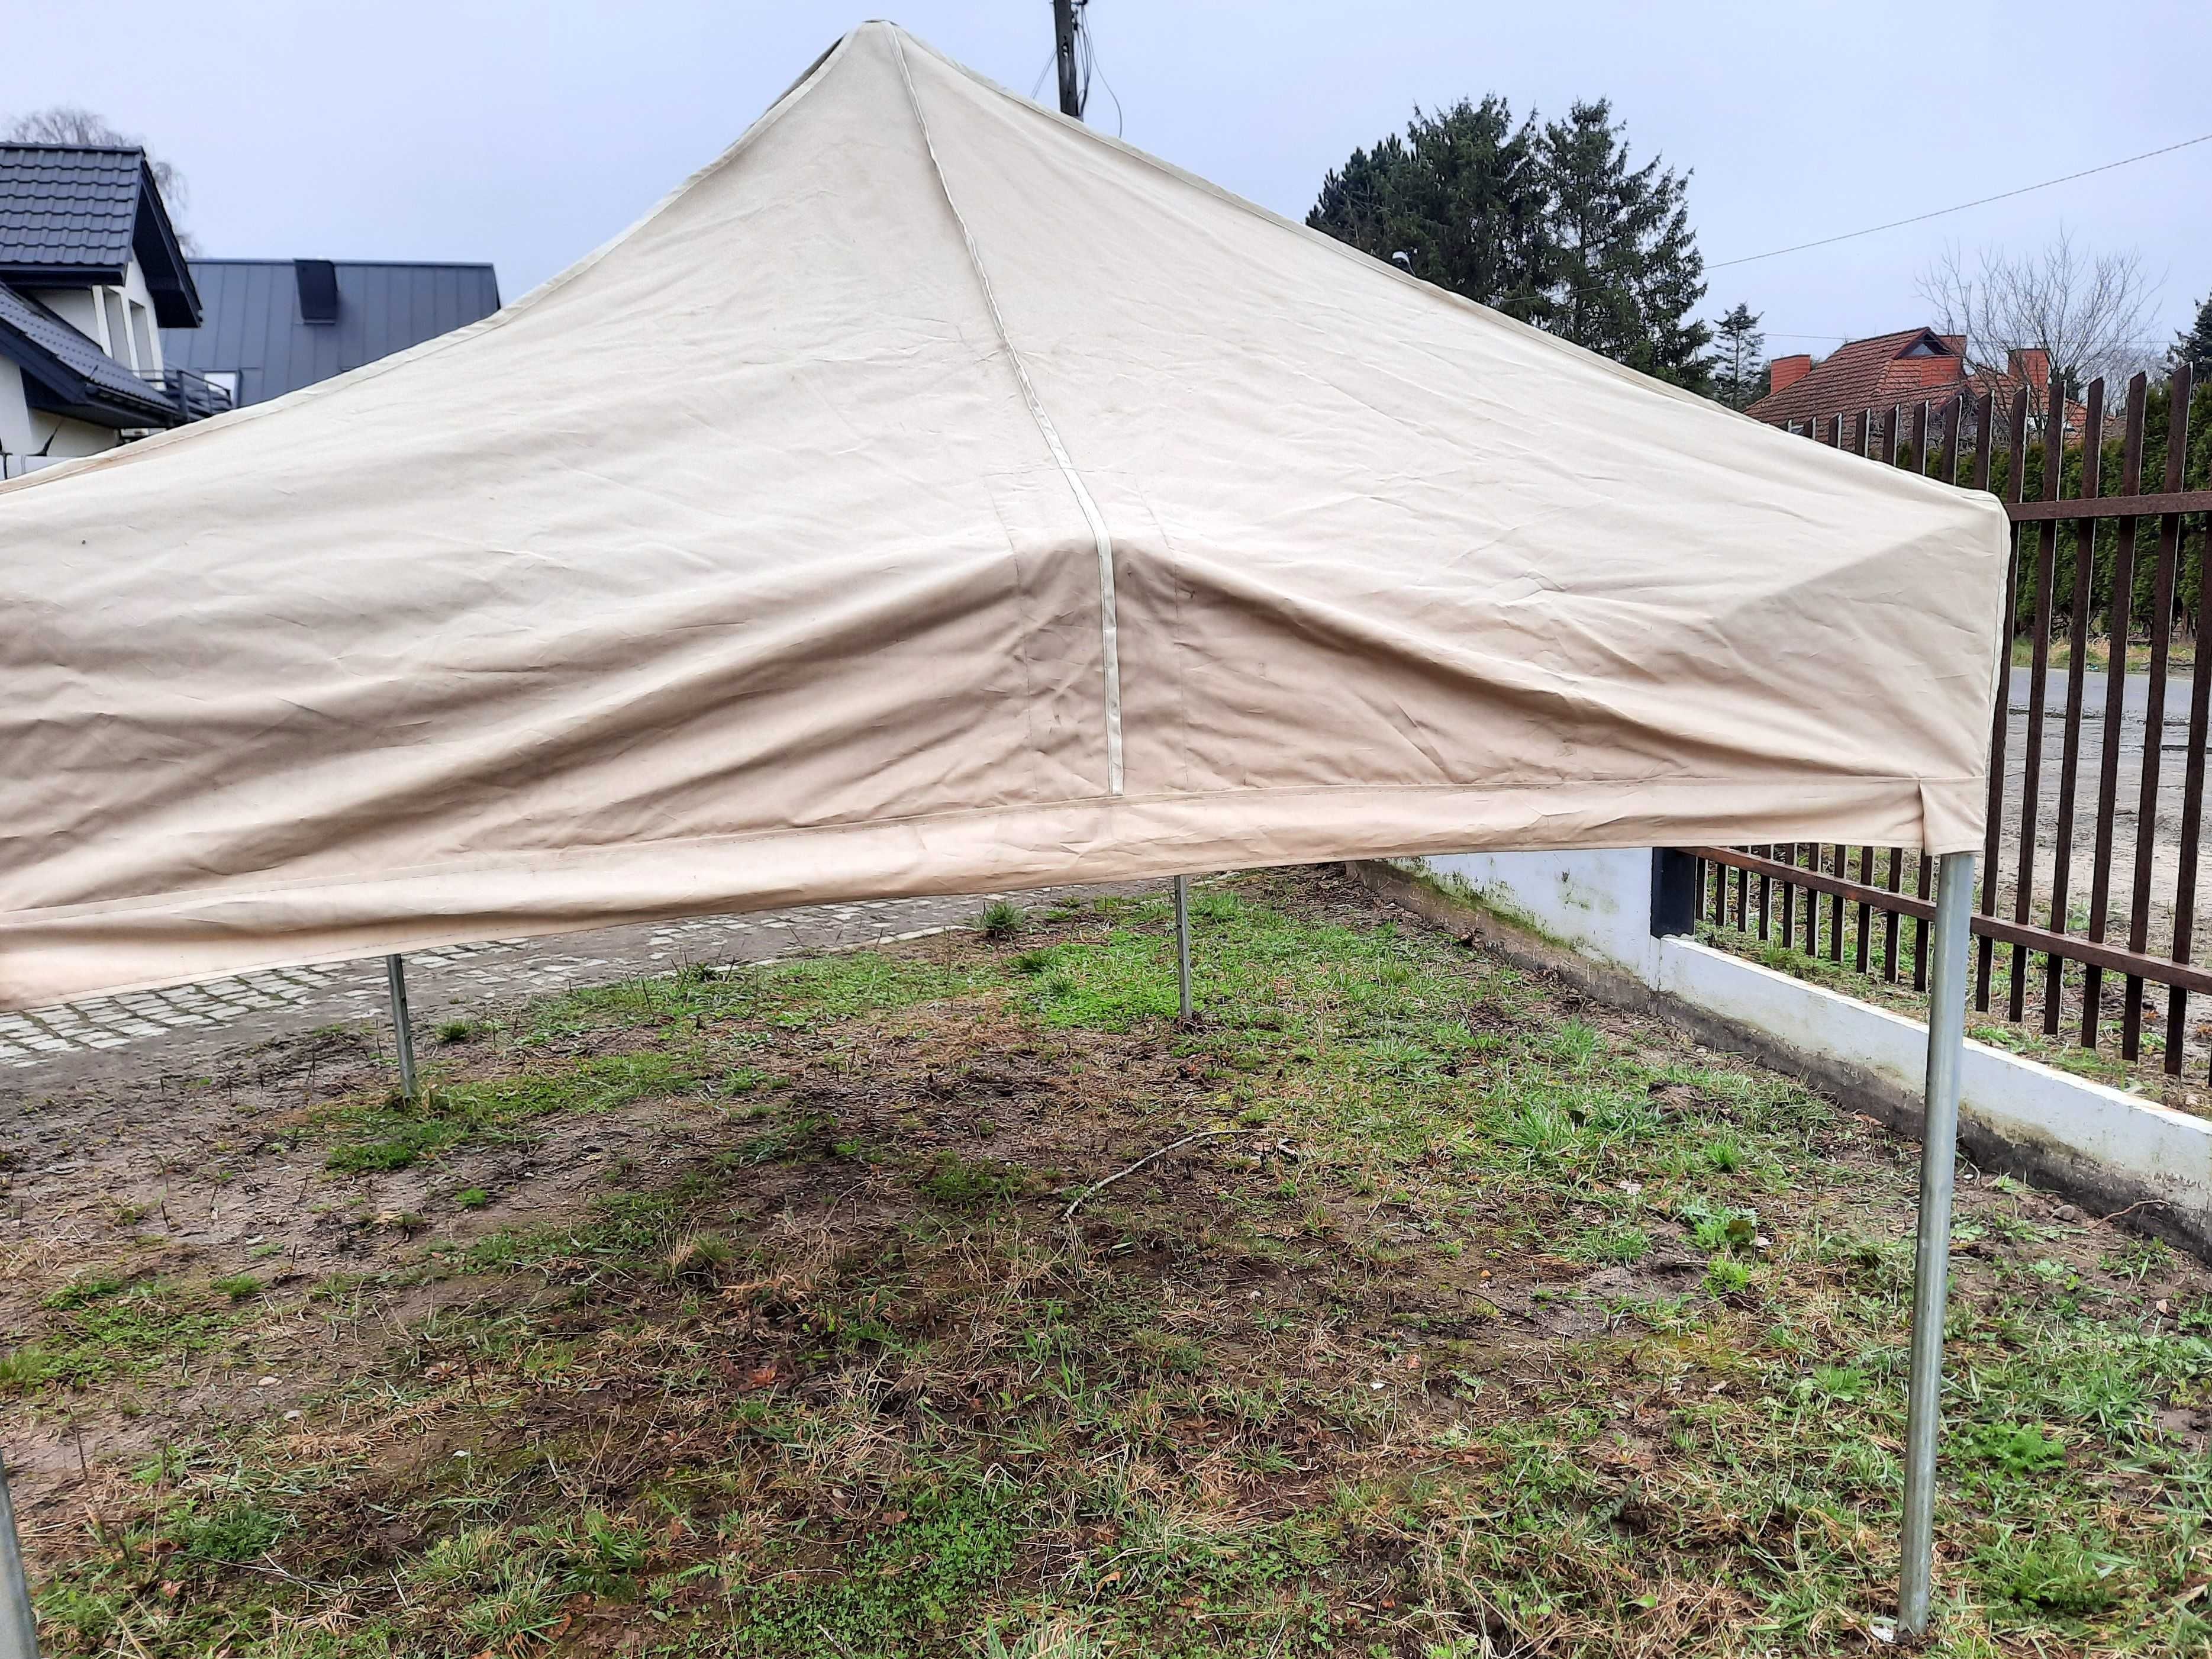 GRA LECH solidny namiot handlowy 2 x 3 m